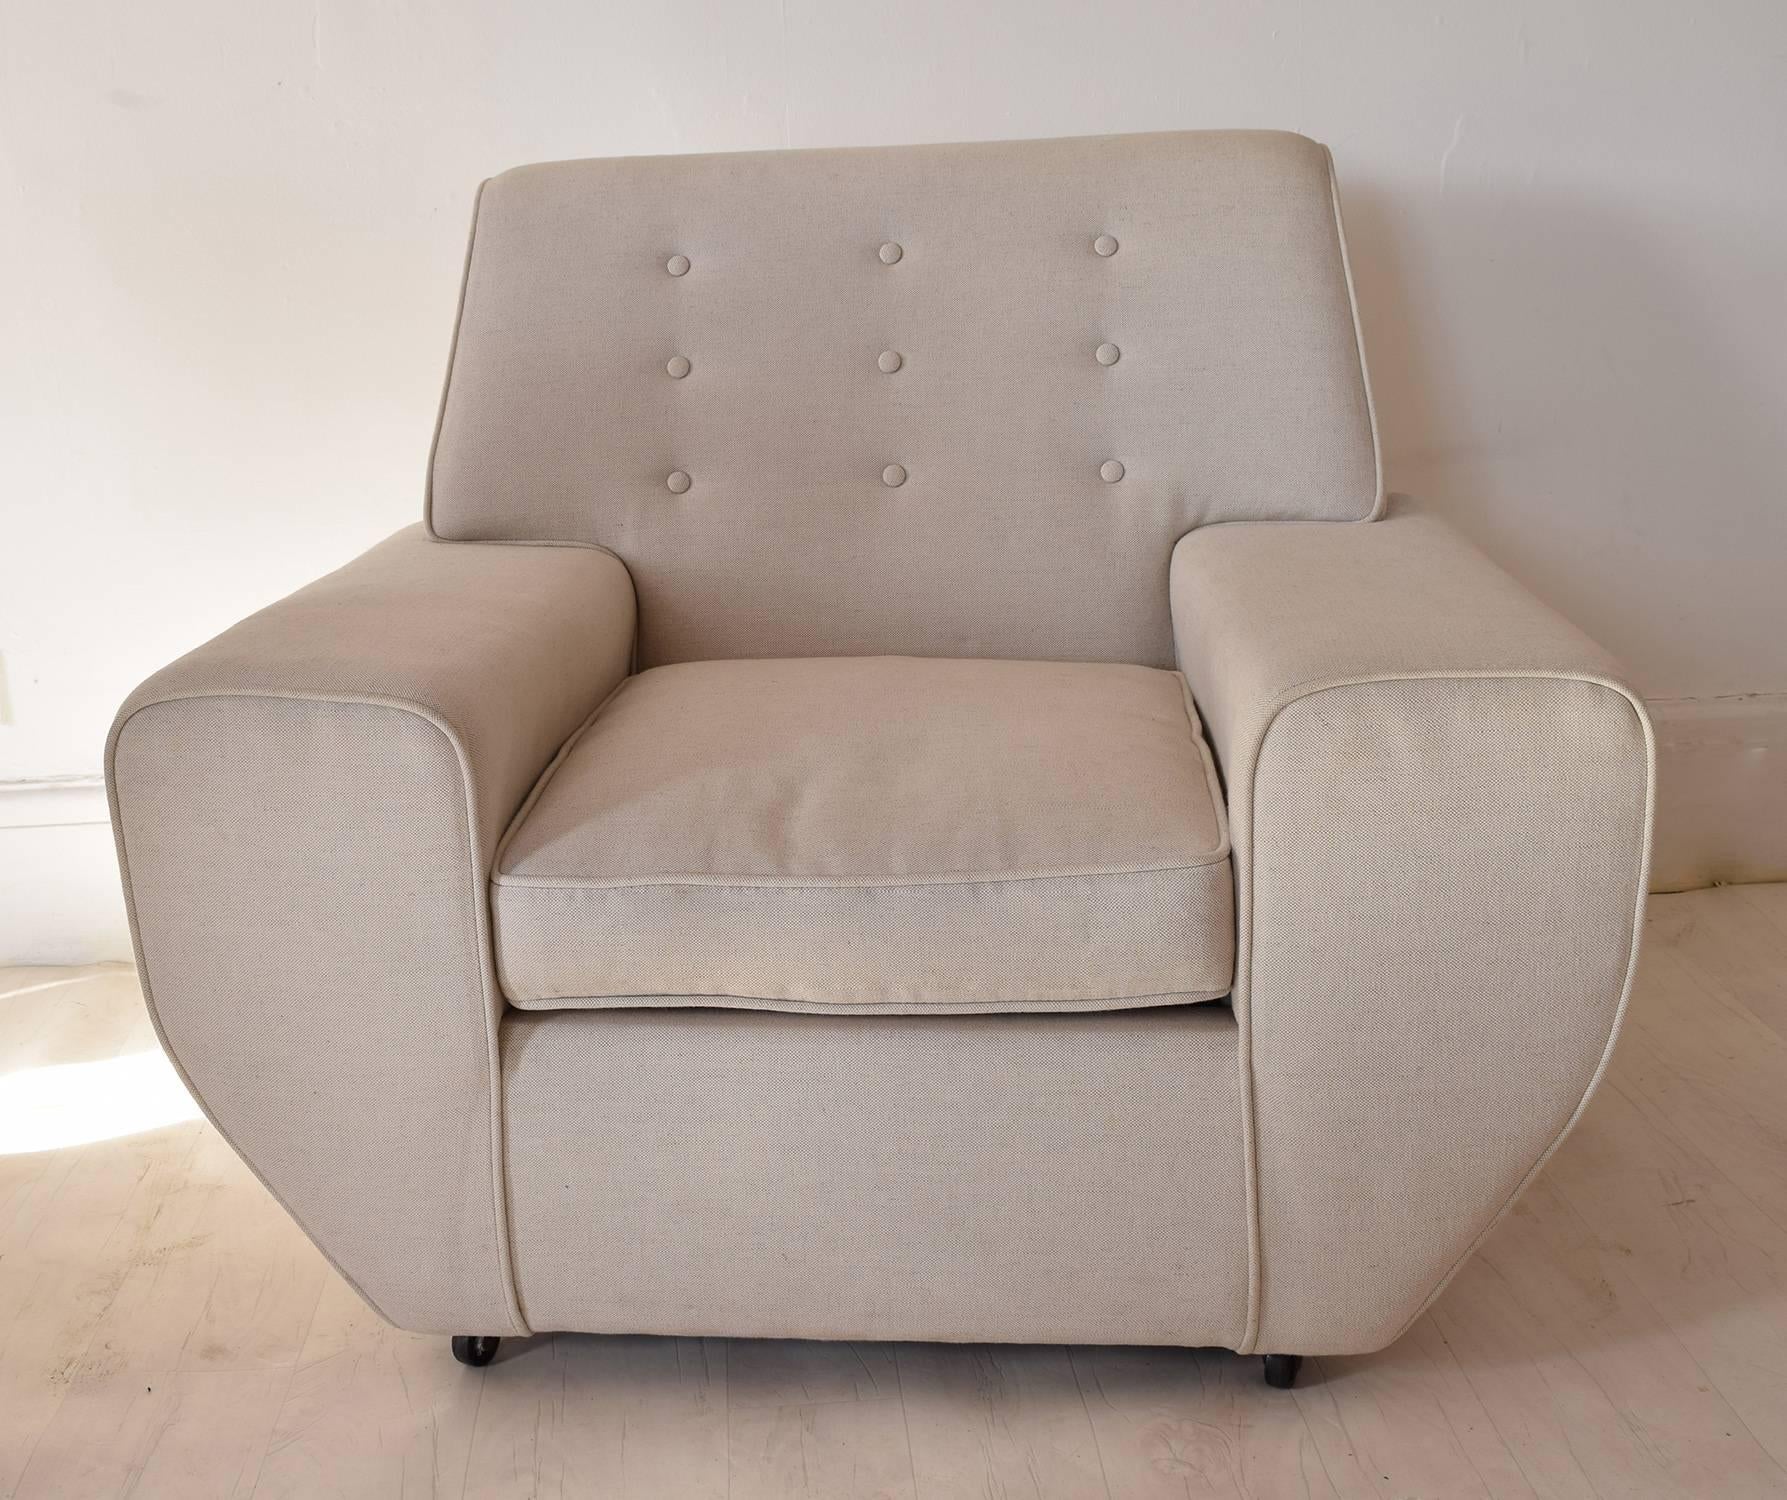 English Pair of Geometric Cream Linen Upholstered Midcentury Lounge Chairs